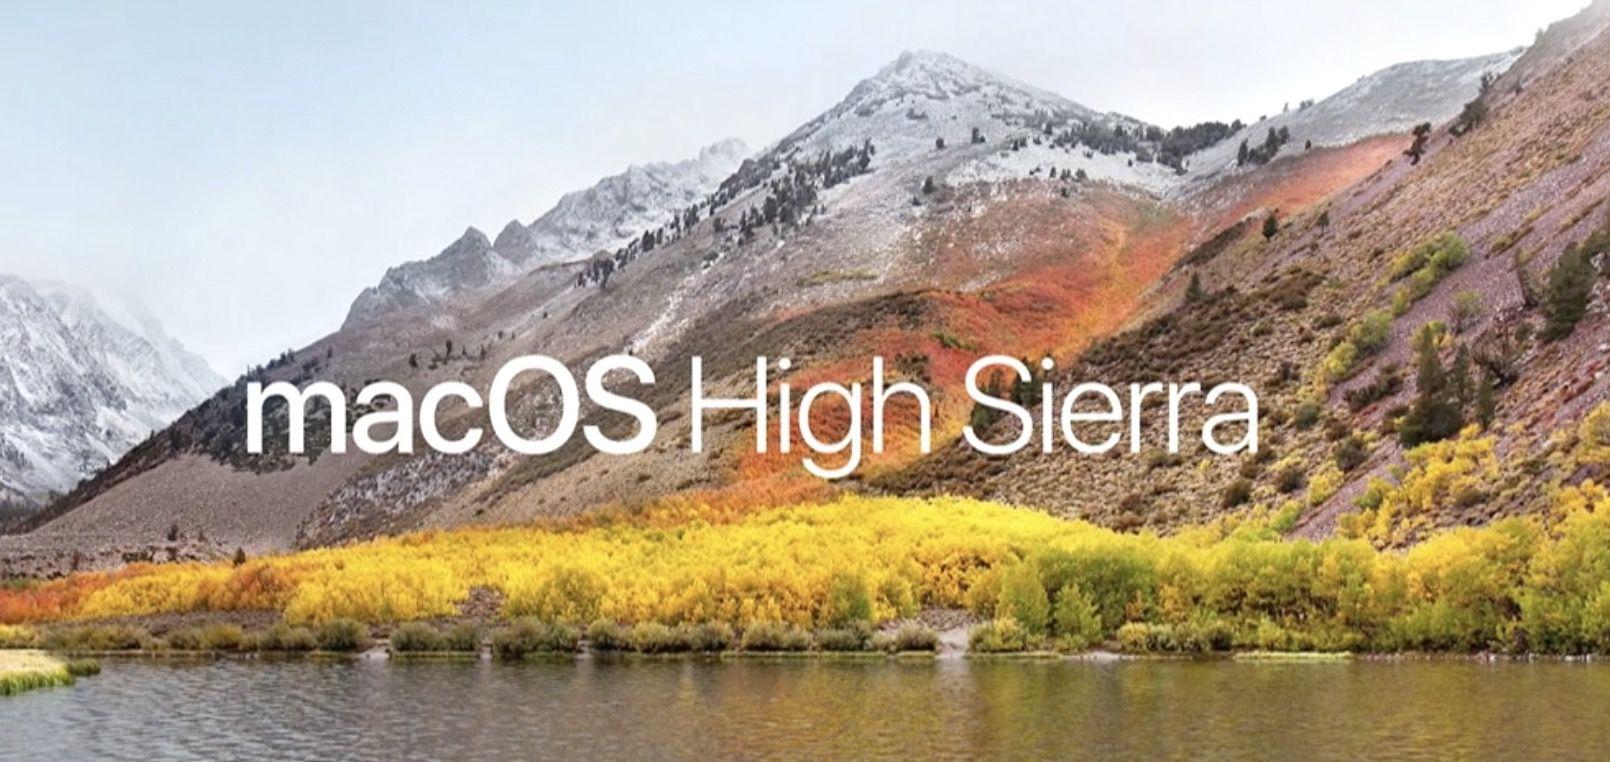 Macos High Sierra Wallpapers Top Free Macos High Sierra Backgrounds Wallpaperaccess